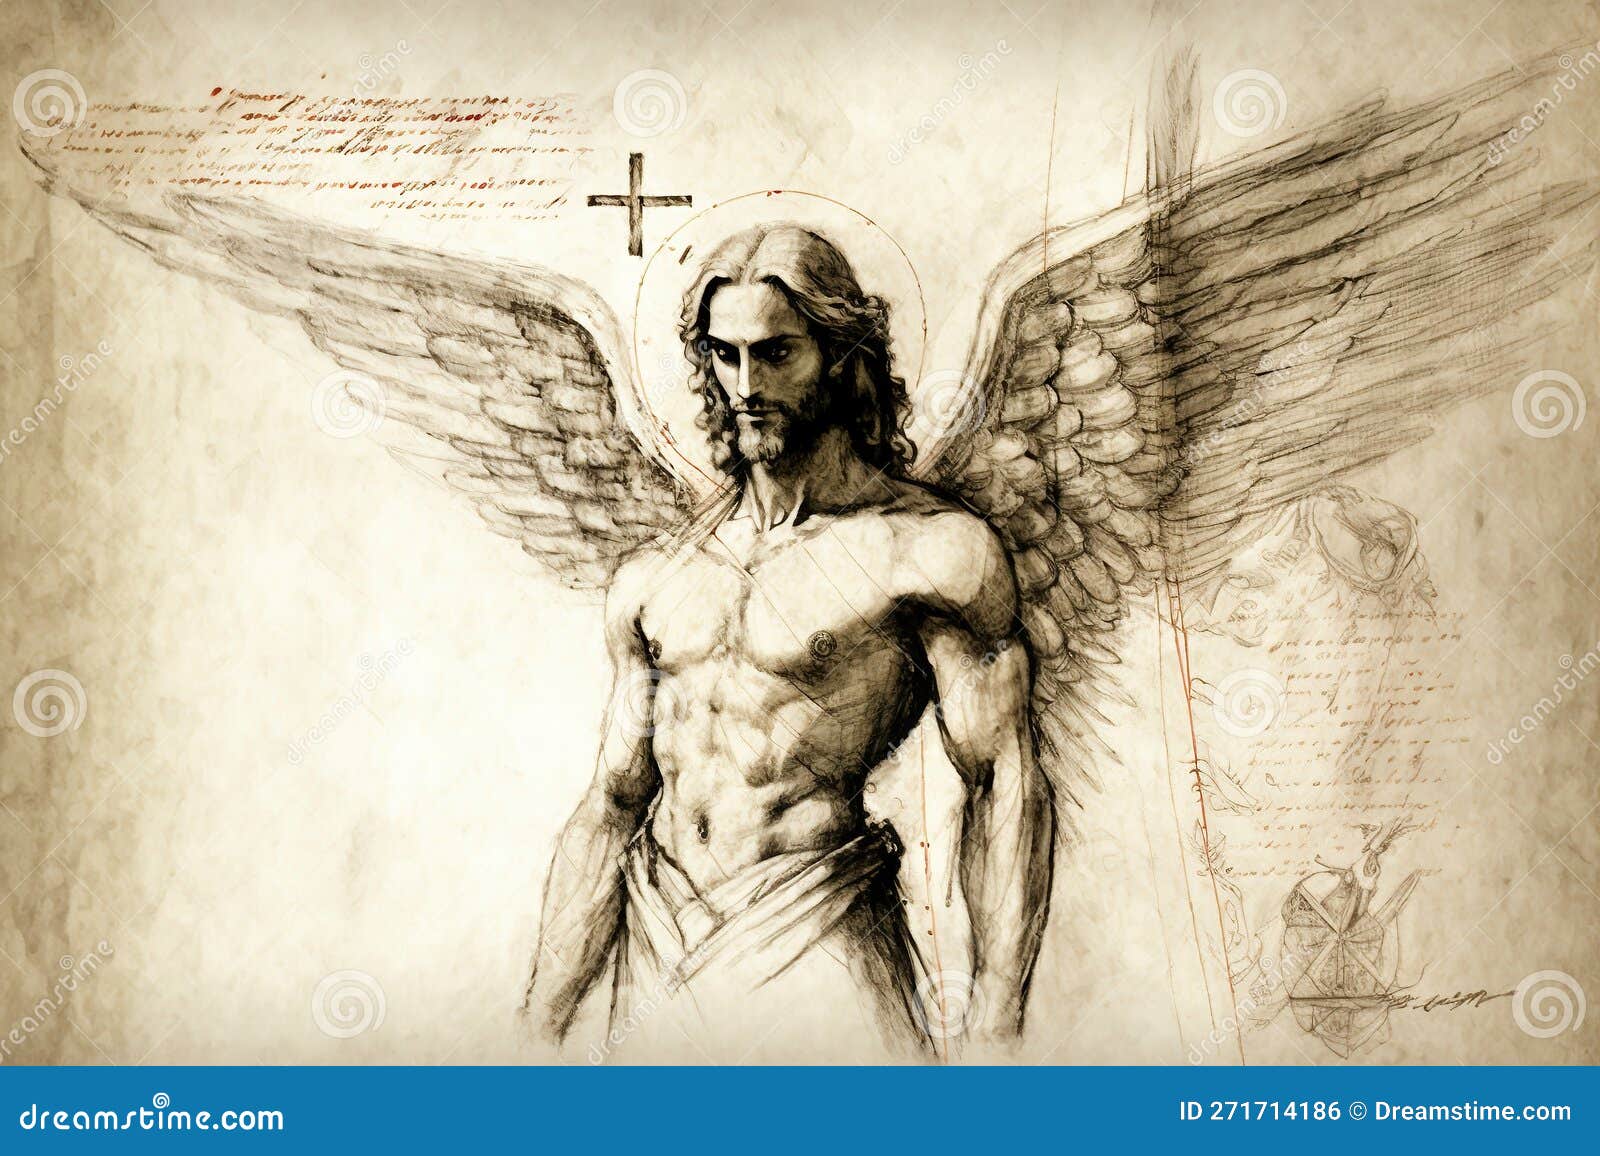 Angel drawing stock vector. Illustration of angel, facial - 10878749